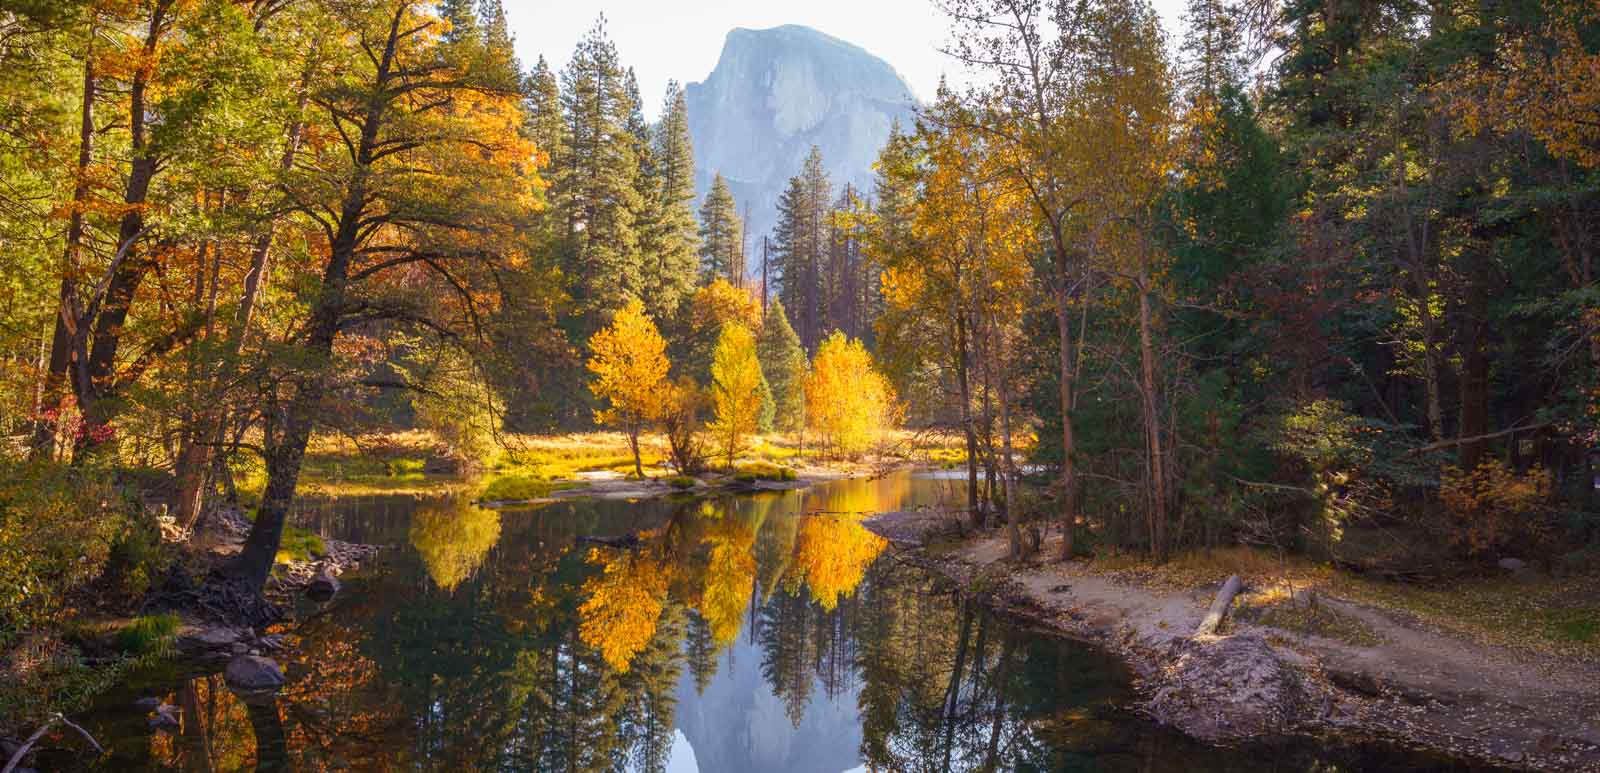 Autumn: The Best Season For Visiting Yosemite?